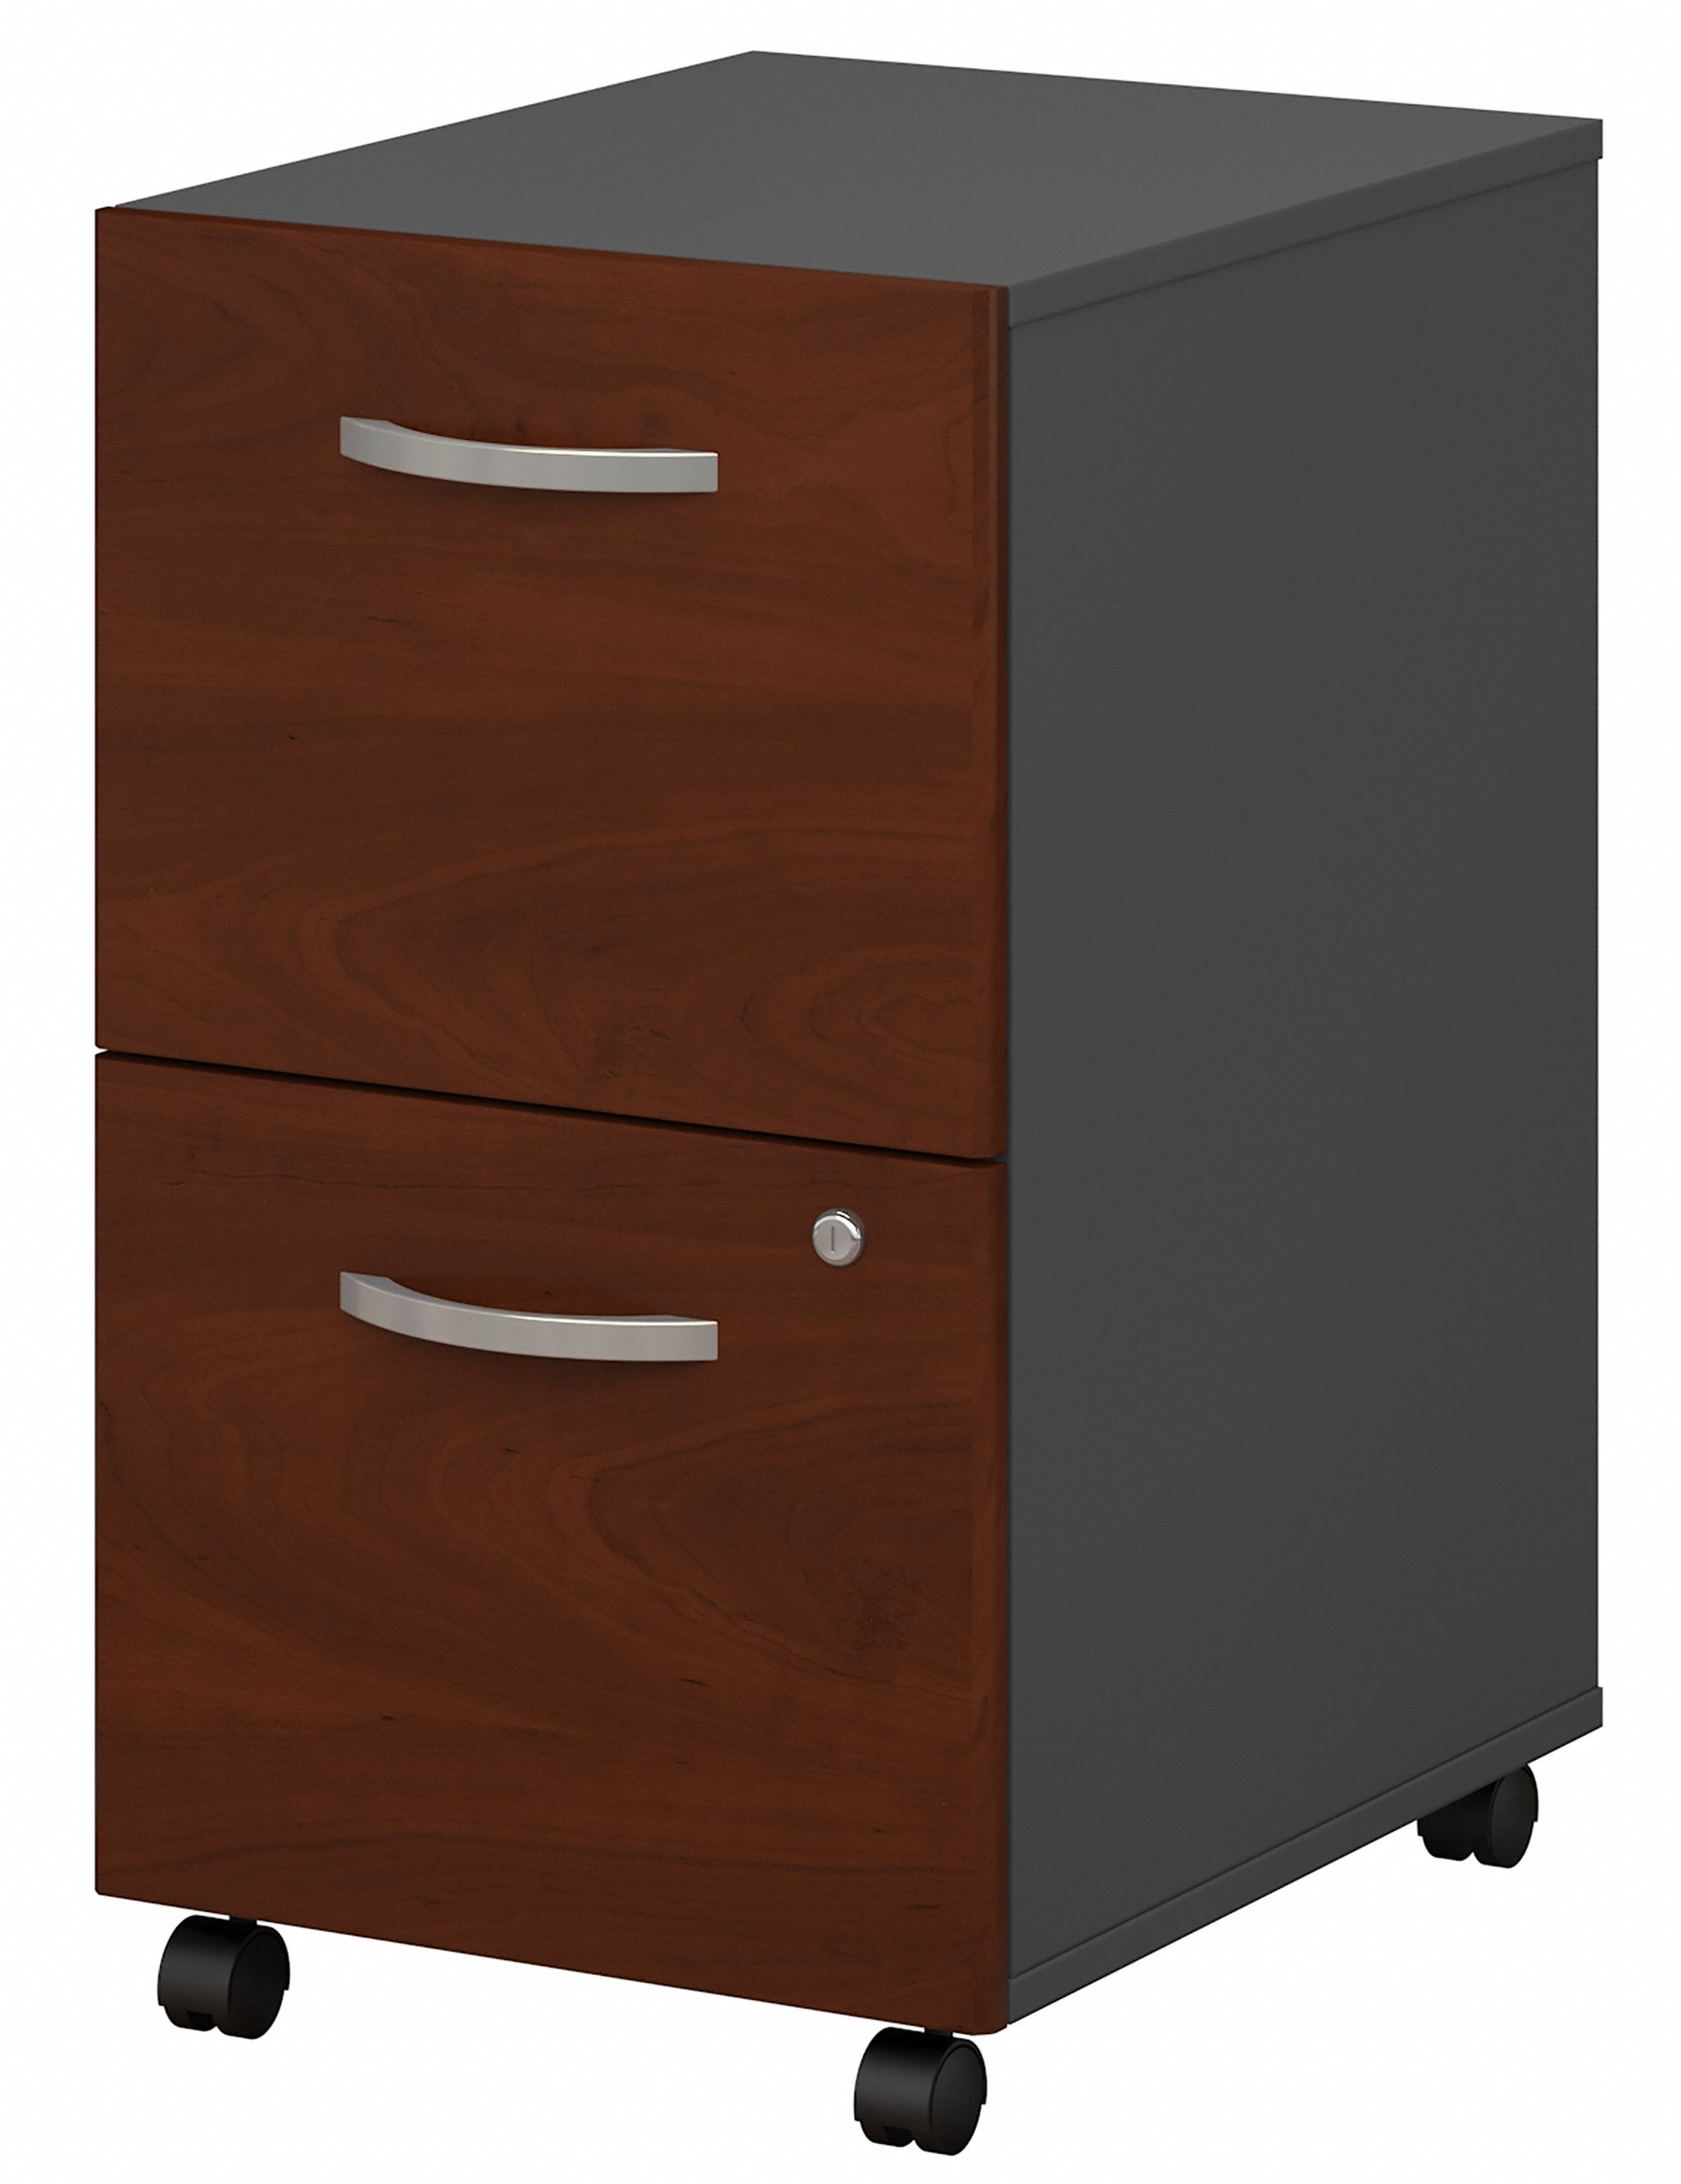 Shop Bush Business Furniture Series C 2 Drawer Mobile File Cabinet - Assembled 02 WC24452SU #color_hansen cherry/graphite gray